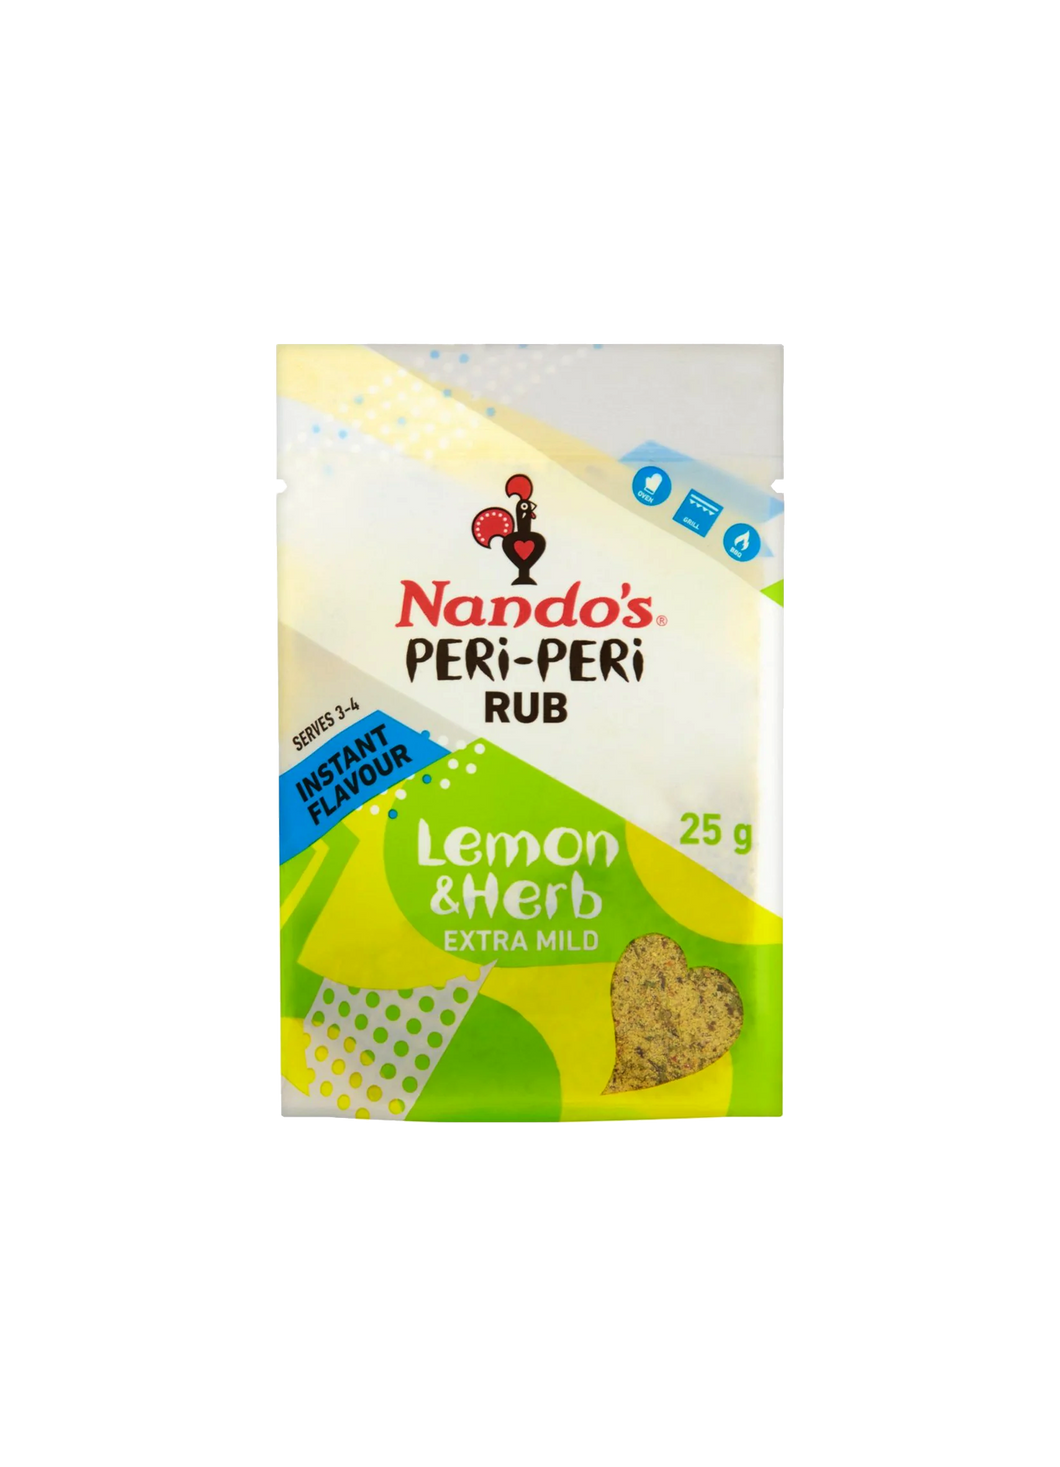 Nando's Peri-Peri Rub Lemon & Herb Extra Mild 25g